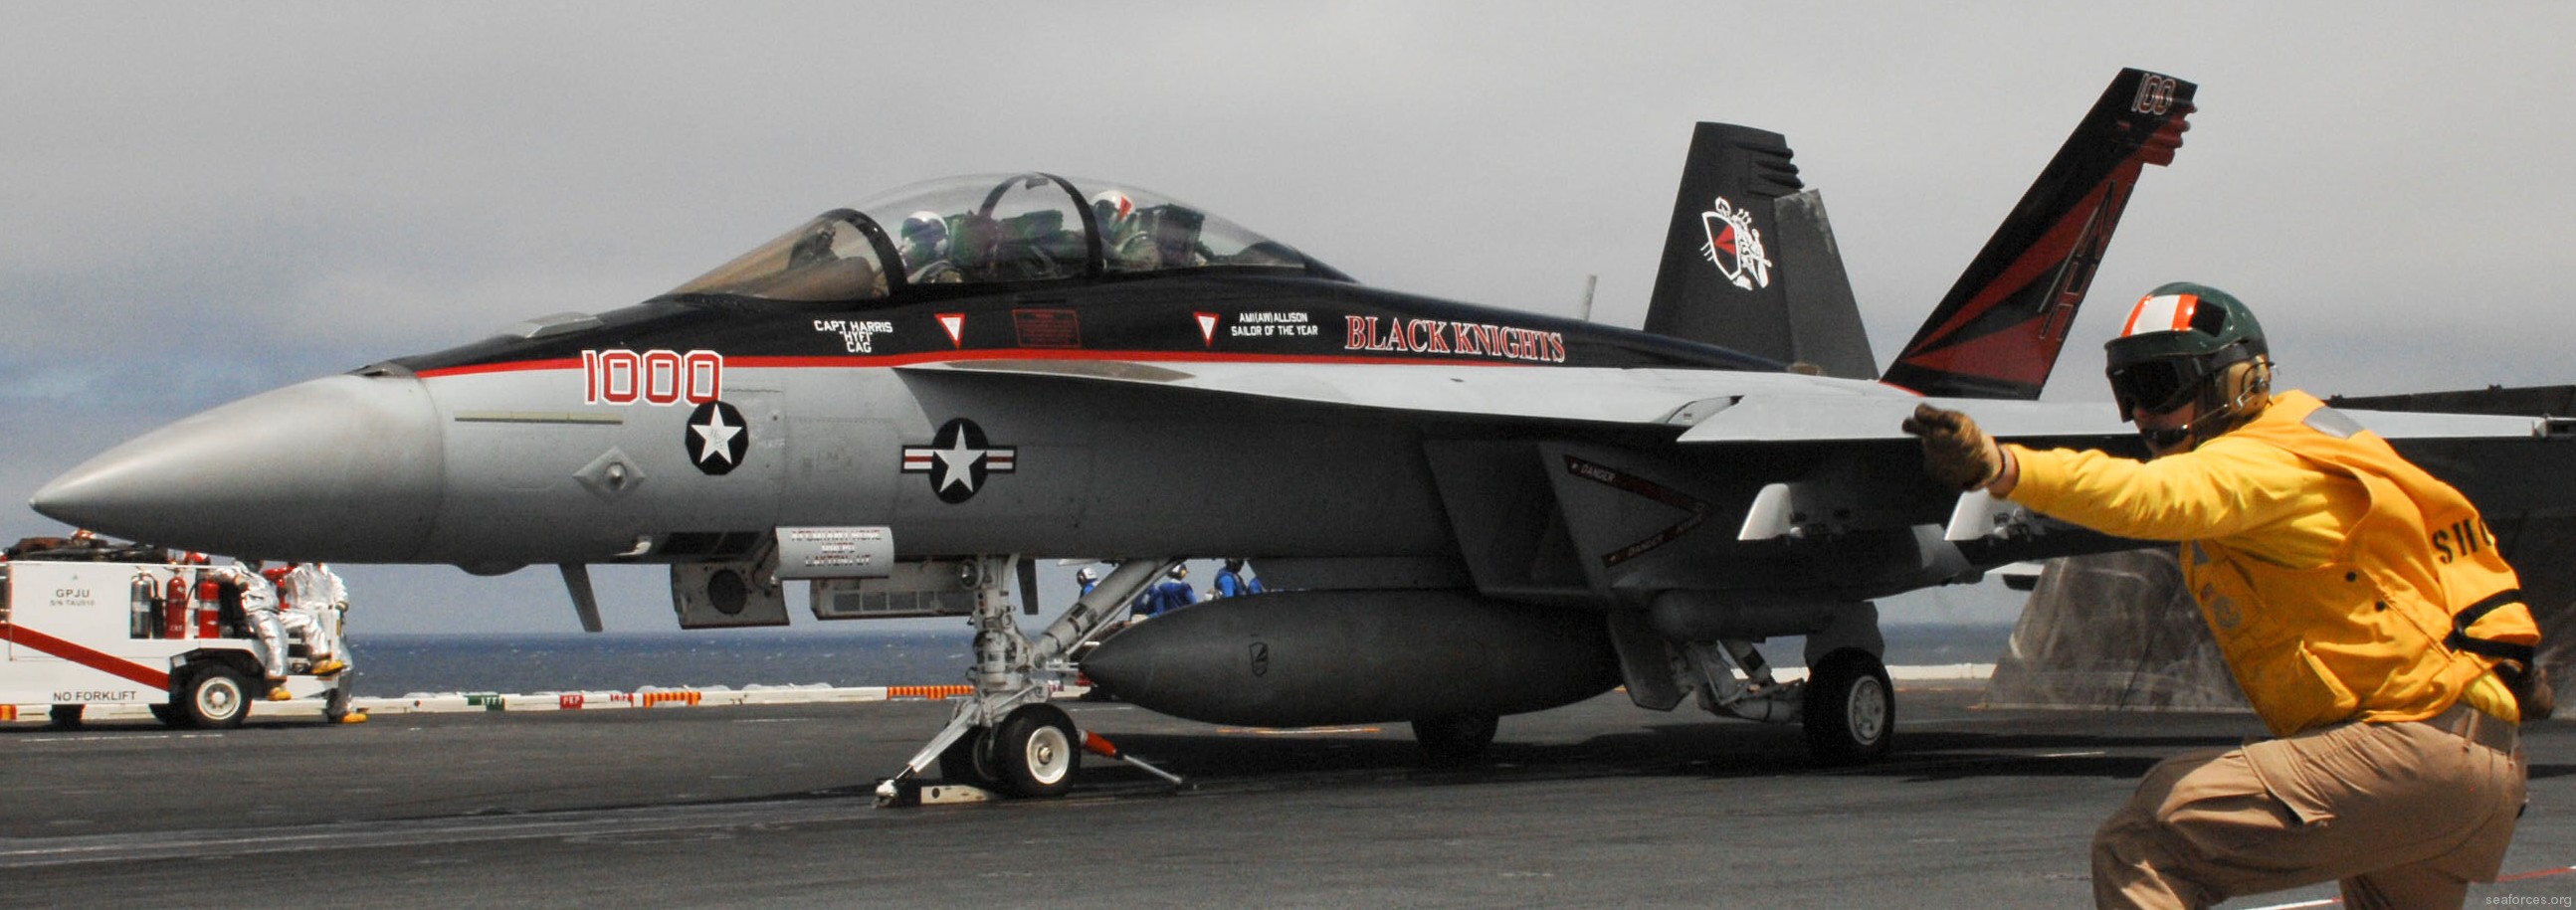 vfa-154 black knights strike fighter squadron navy f/a-18f super hornet carrier air wing cvw-11 uss nimitz cvn-68 87